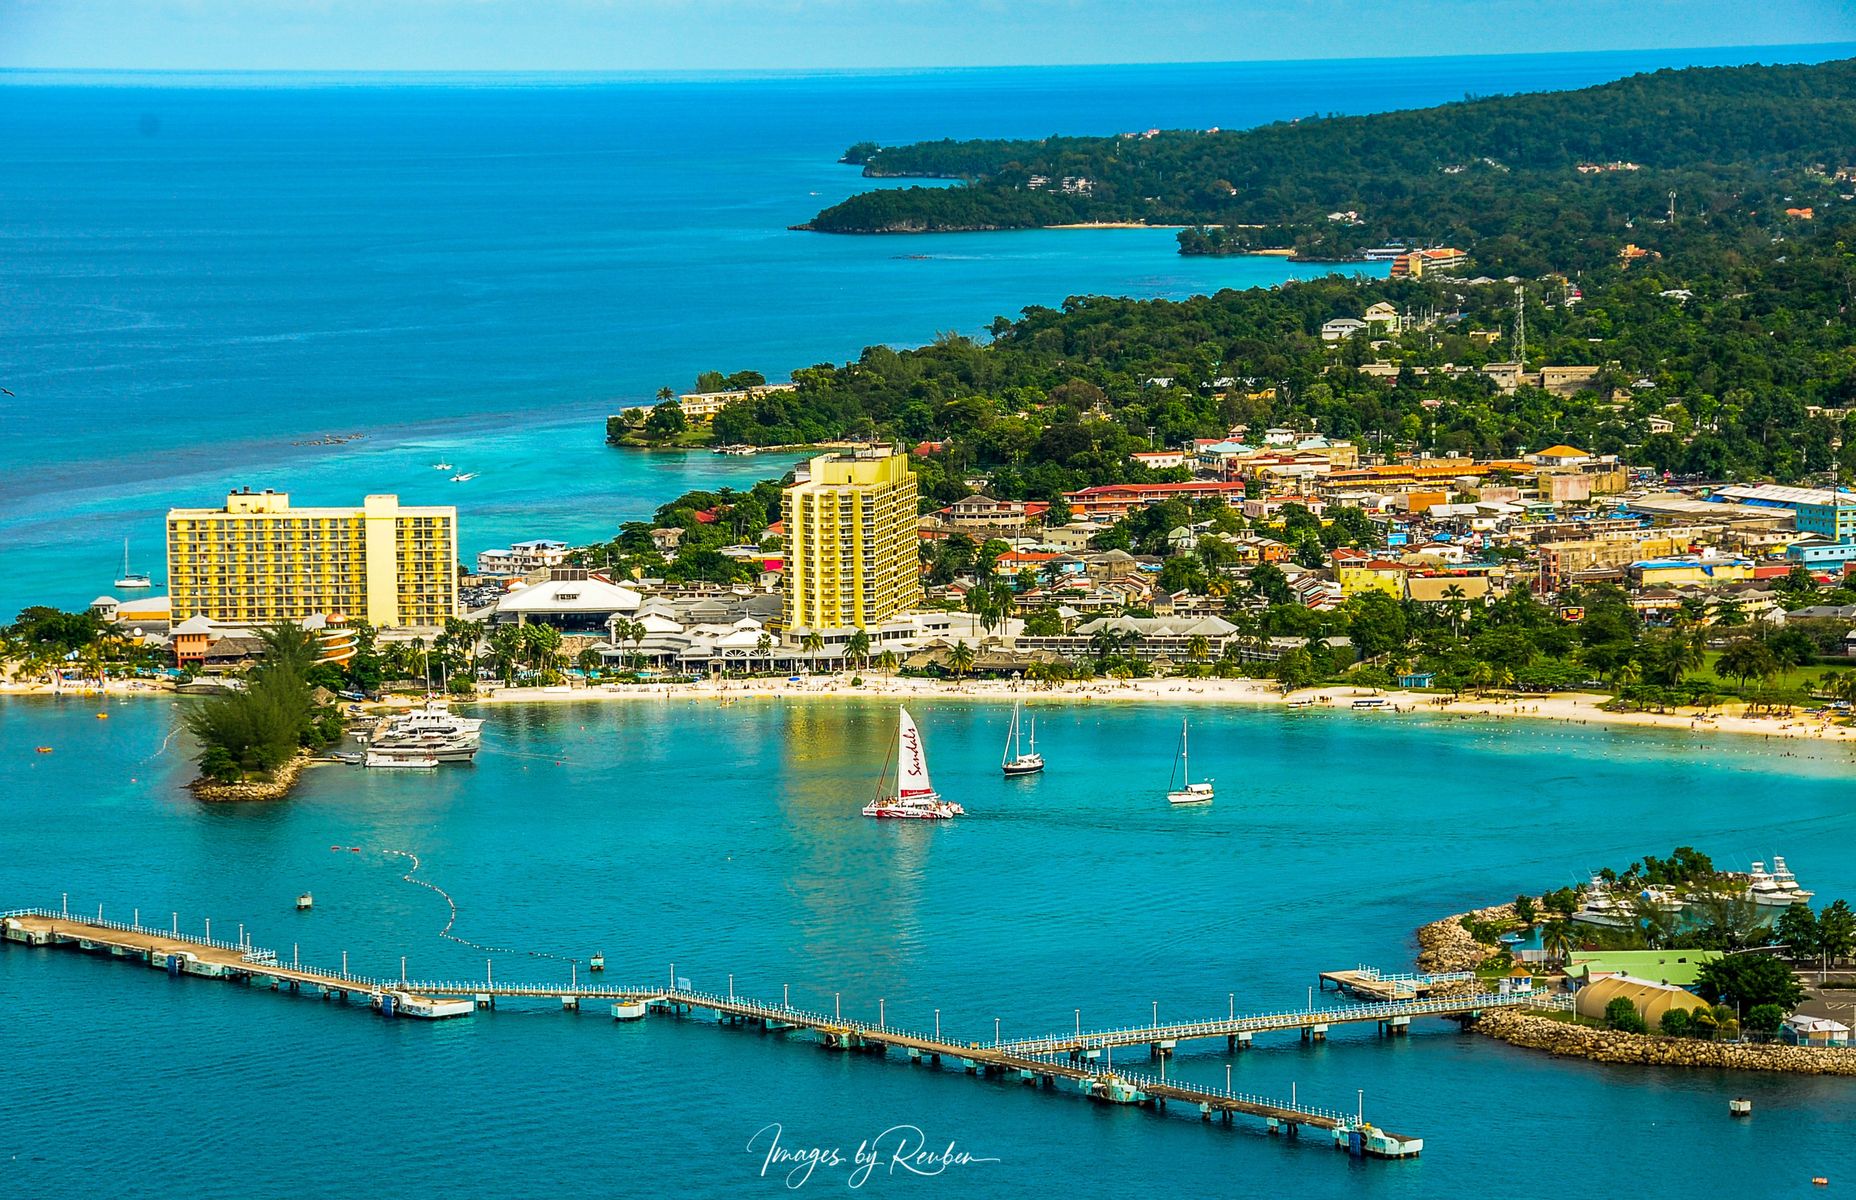 Jamaica – Images by Reuben